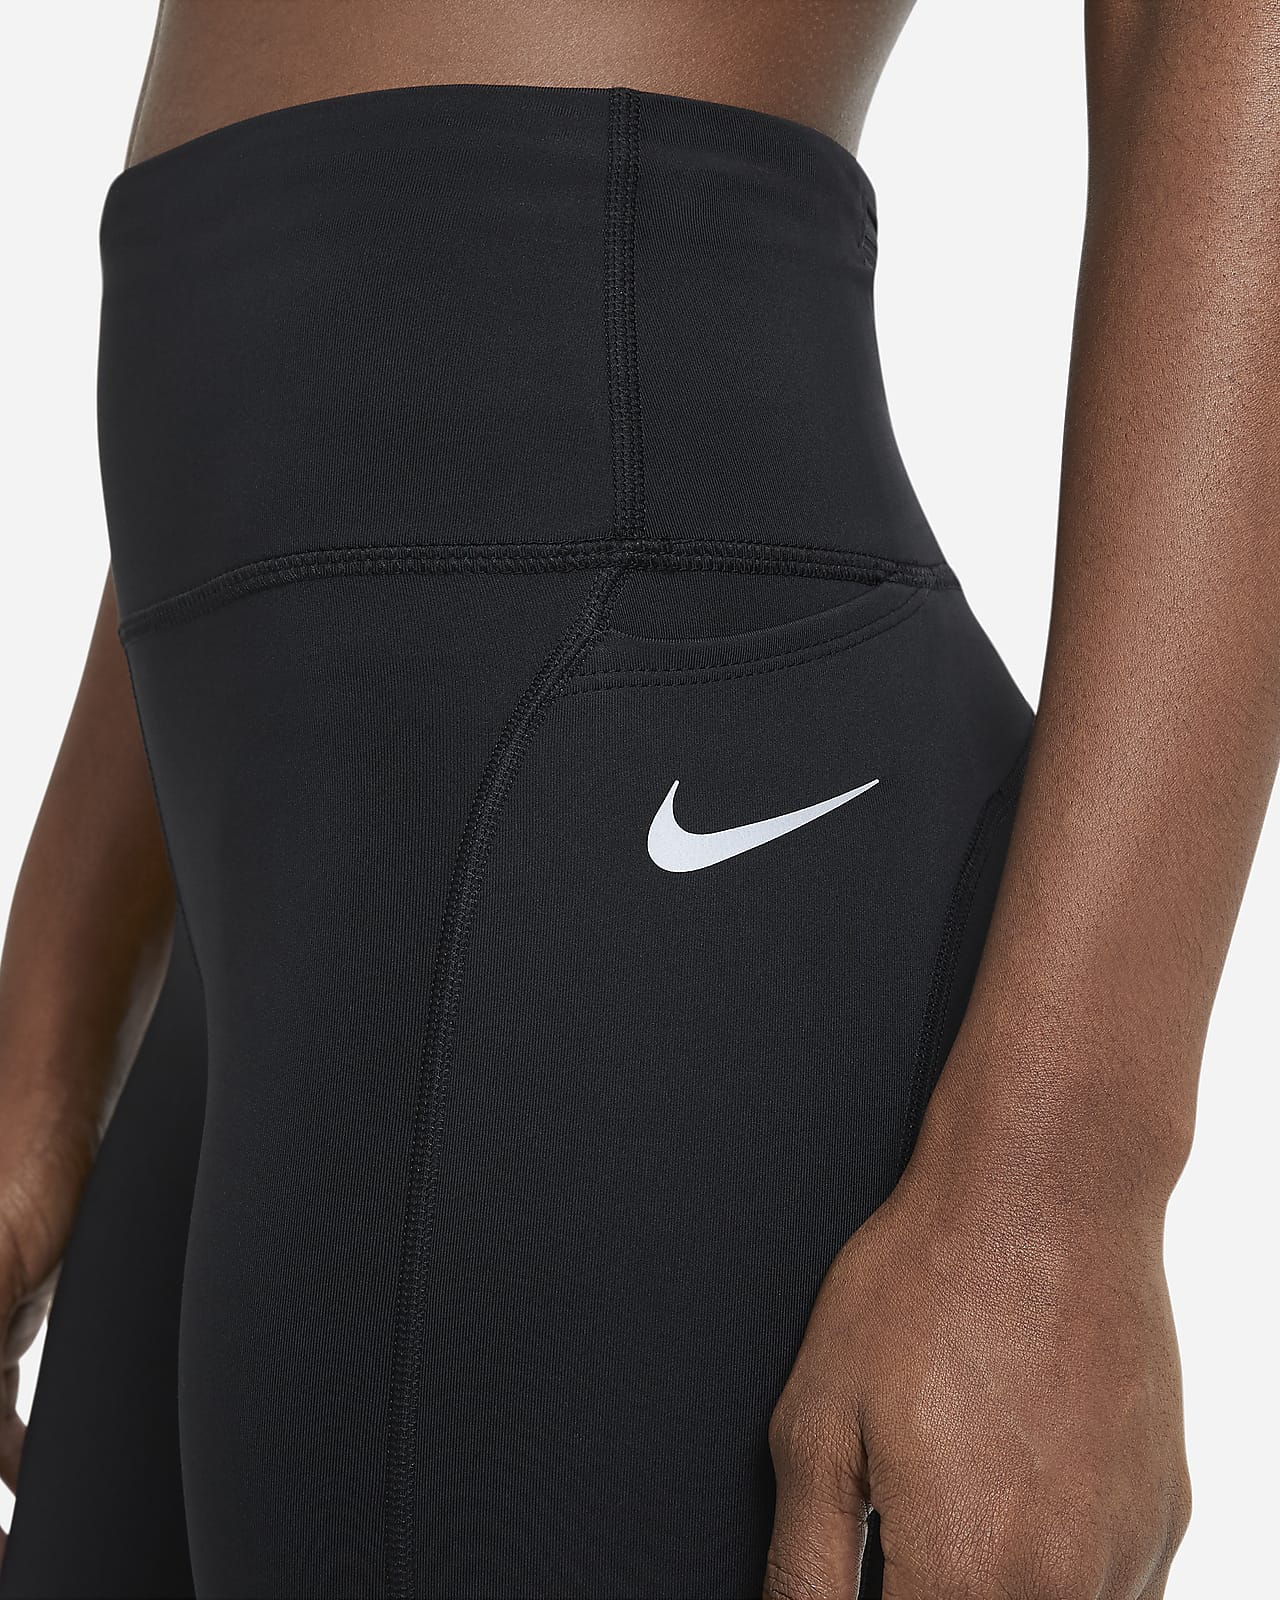 The best leggings for running by Nike. Nike IE